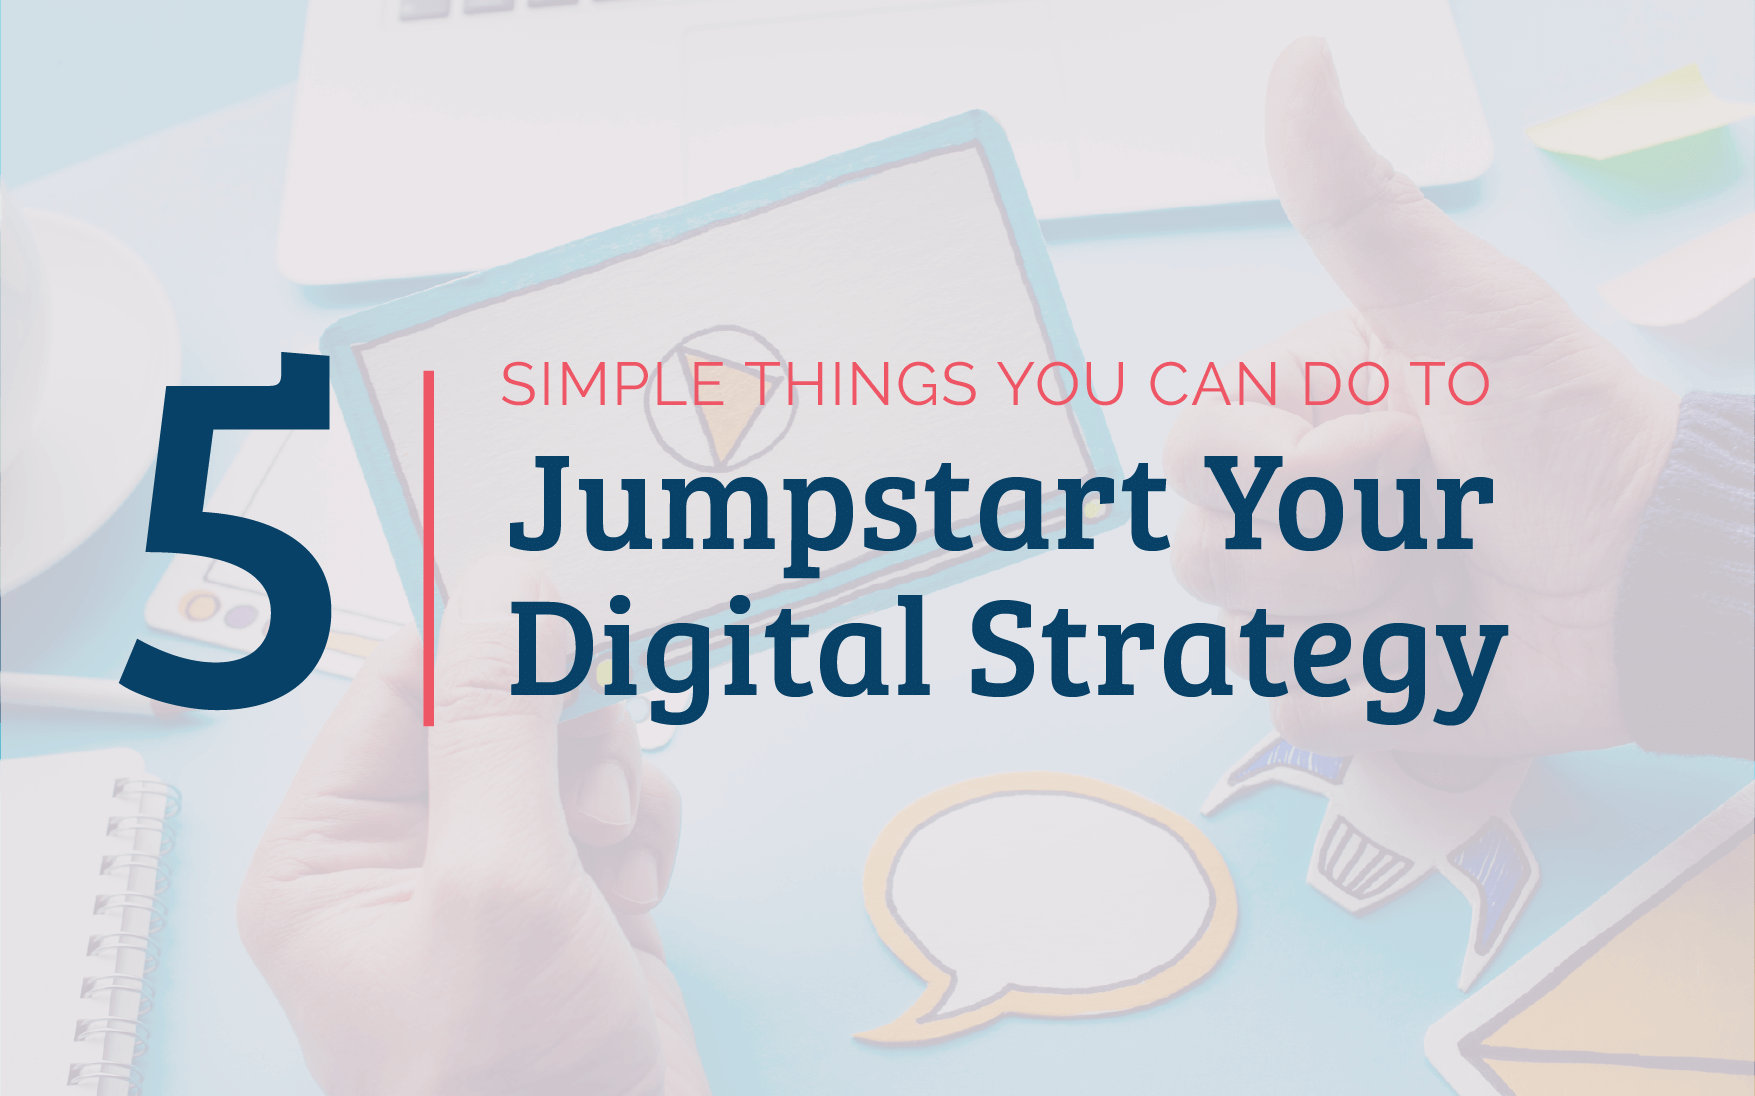 Jumpstart your digital strategy